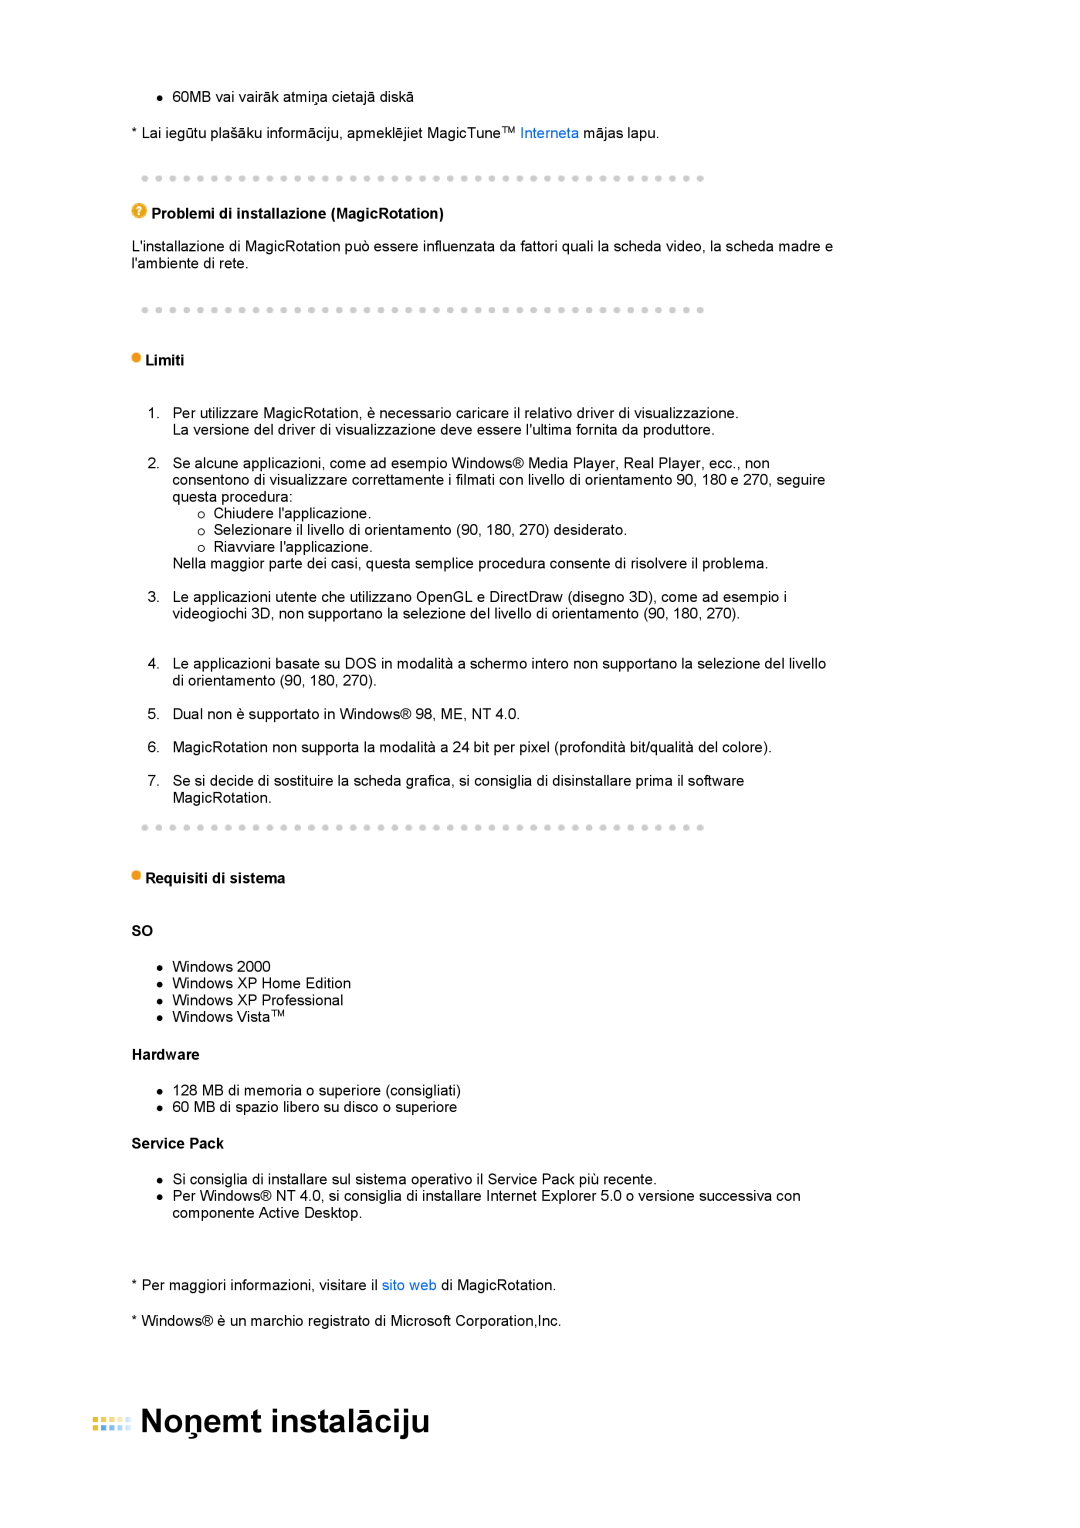 Samsung LS24HUCEBQ/EDC manual Noņemt instalāciju, Problemi di installazione MagicRotation, Limiti, Requisiti di sistema SO 